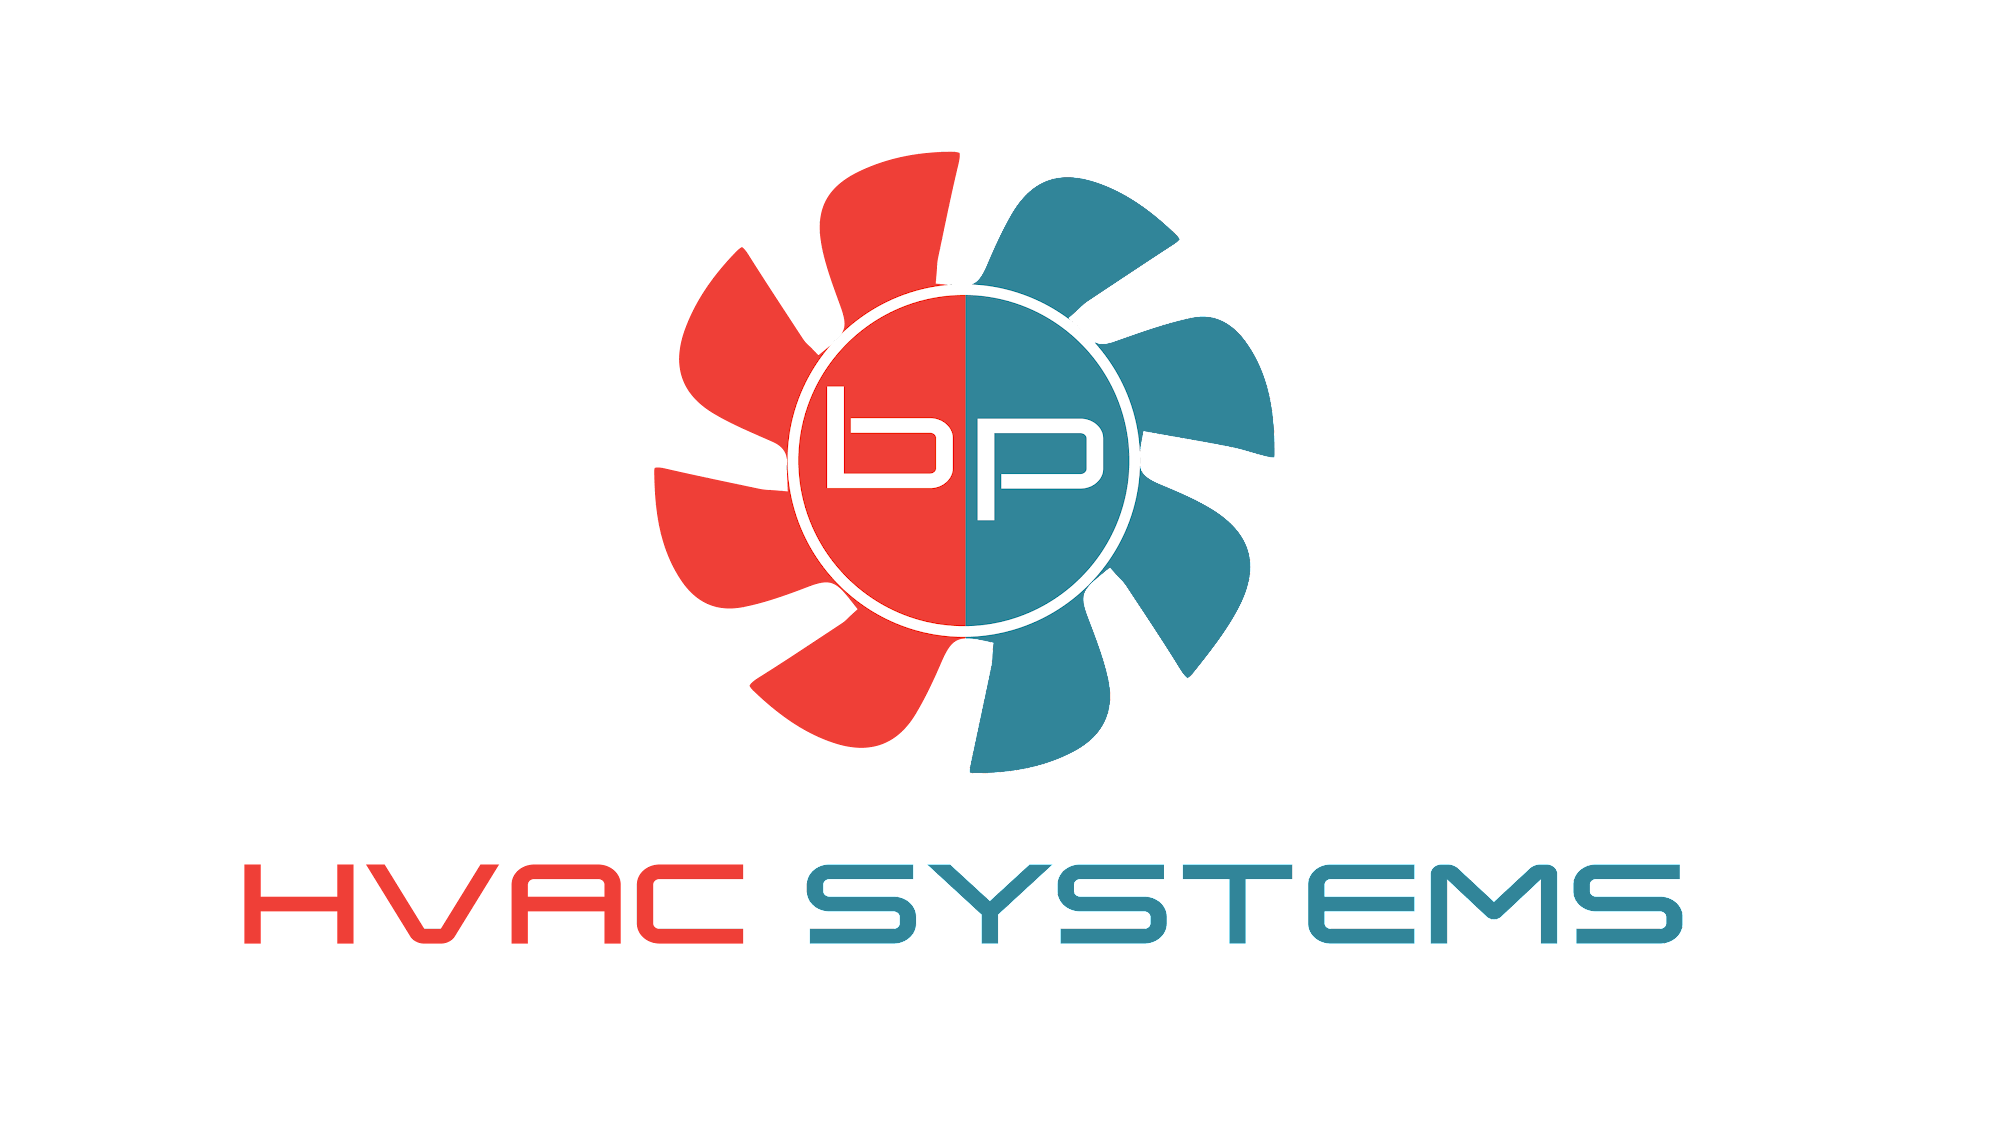 BP HVAC Systems Corp